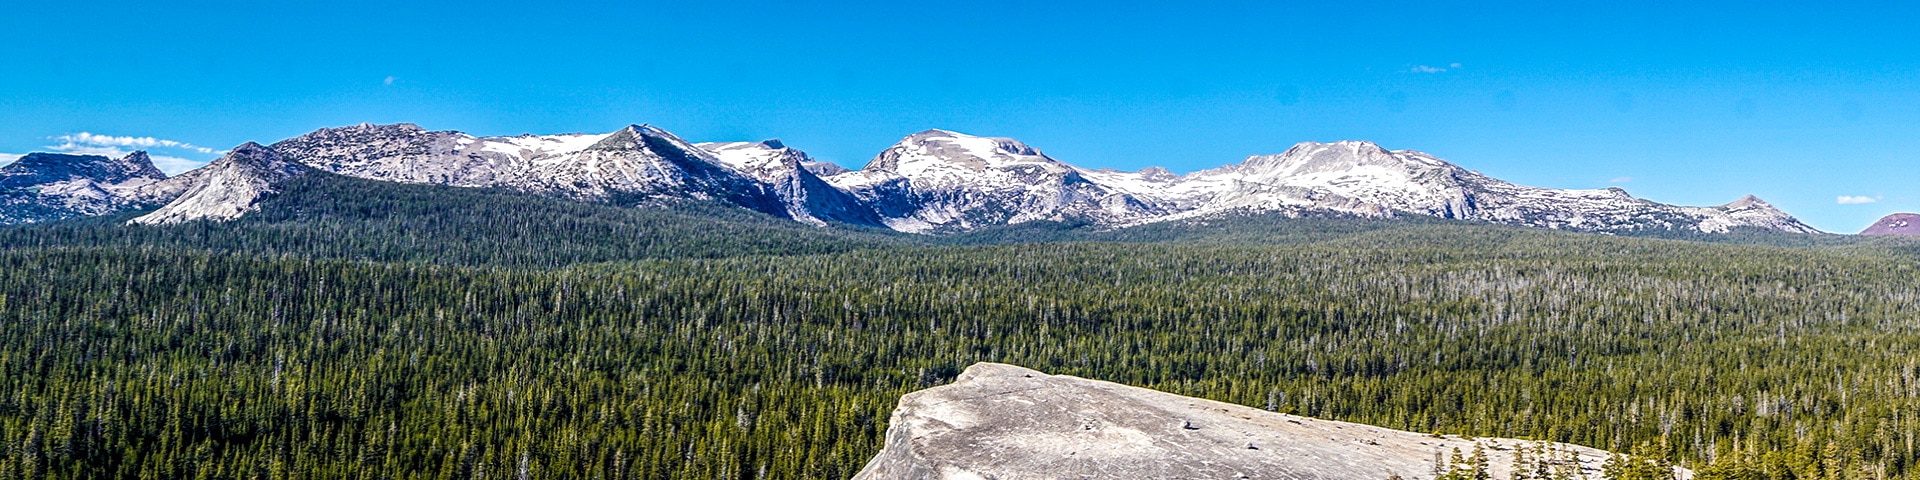 Hiking in Yosemite, California